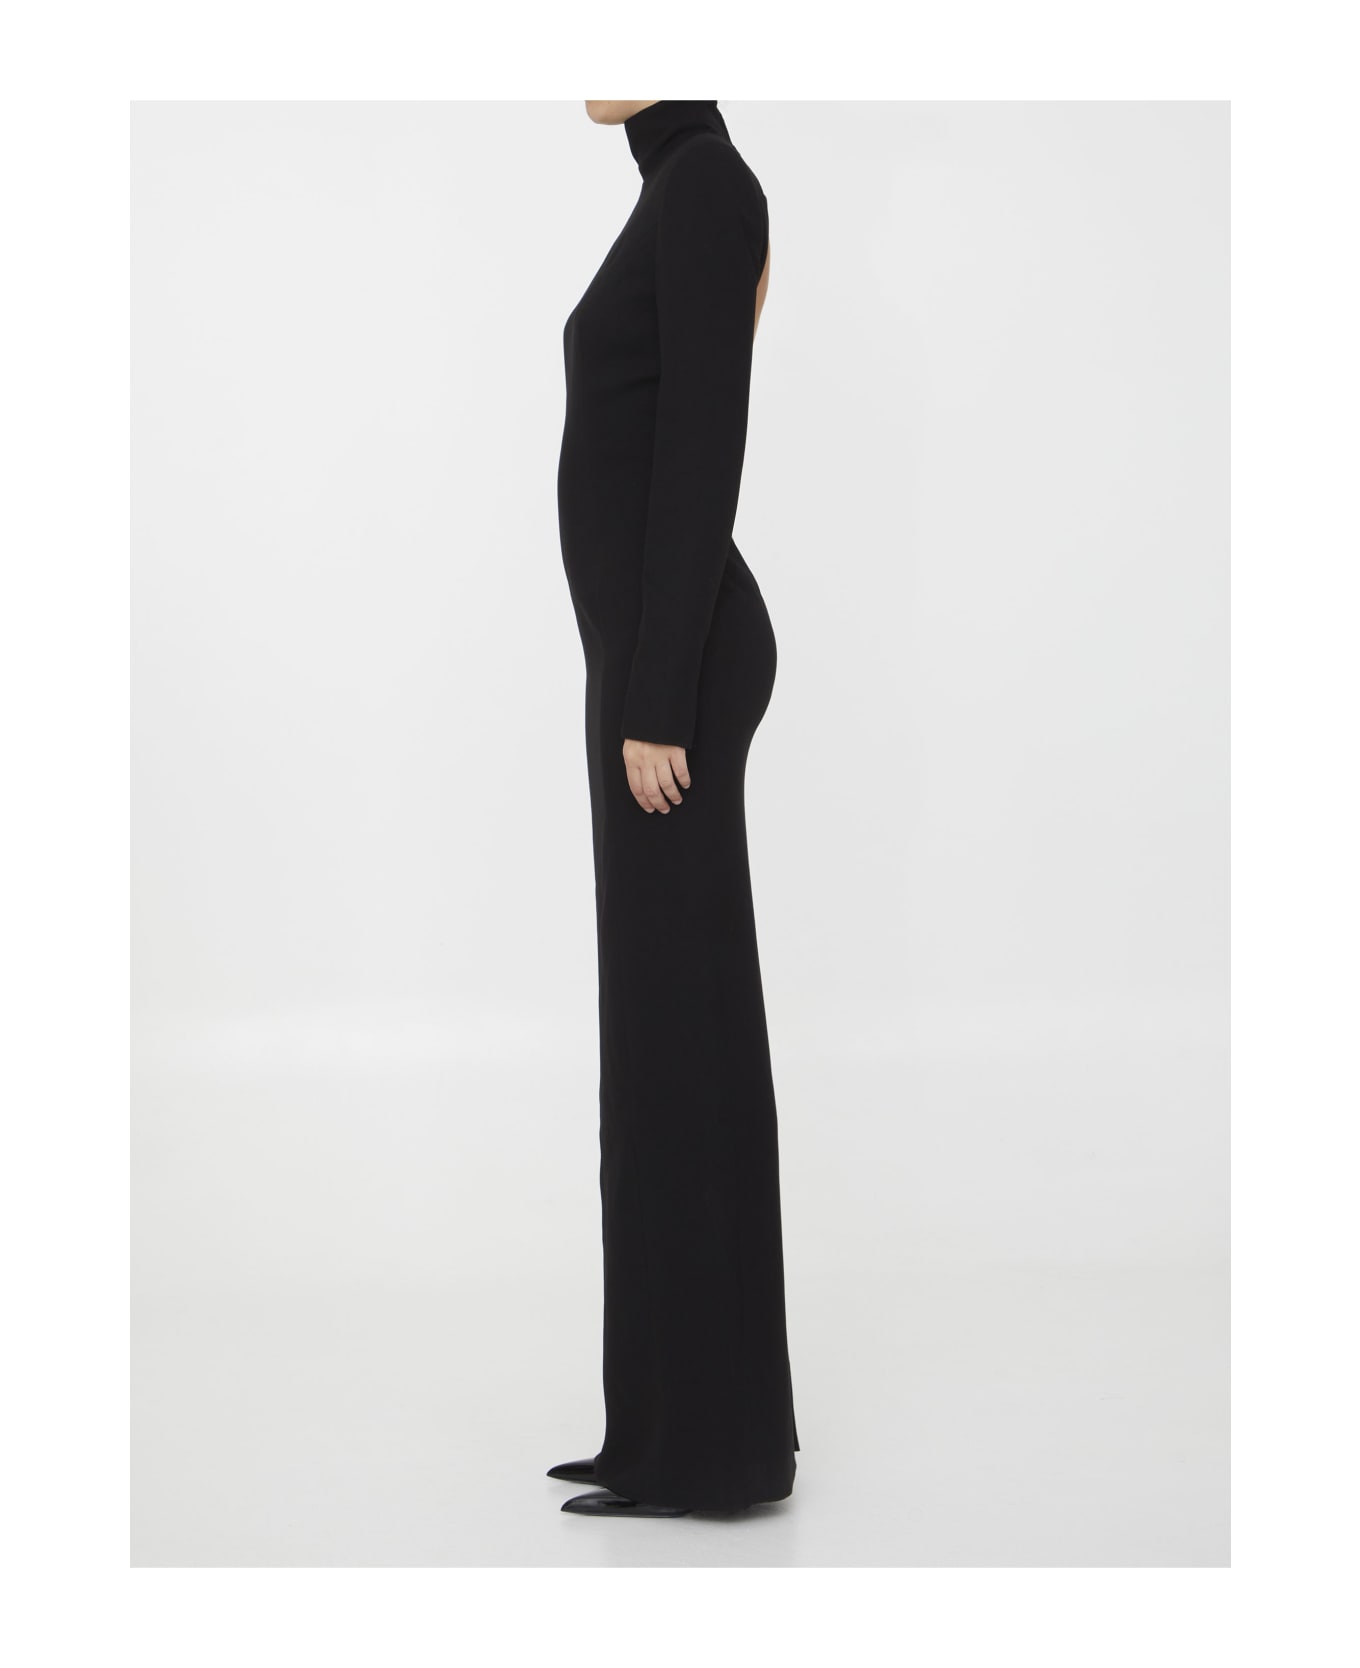 Monot Cut-out Long Dress - BLACK